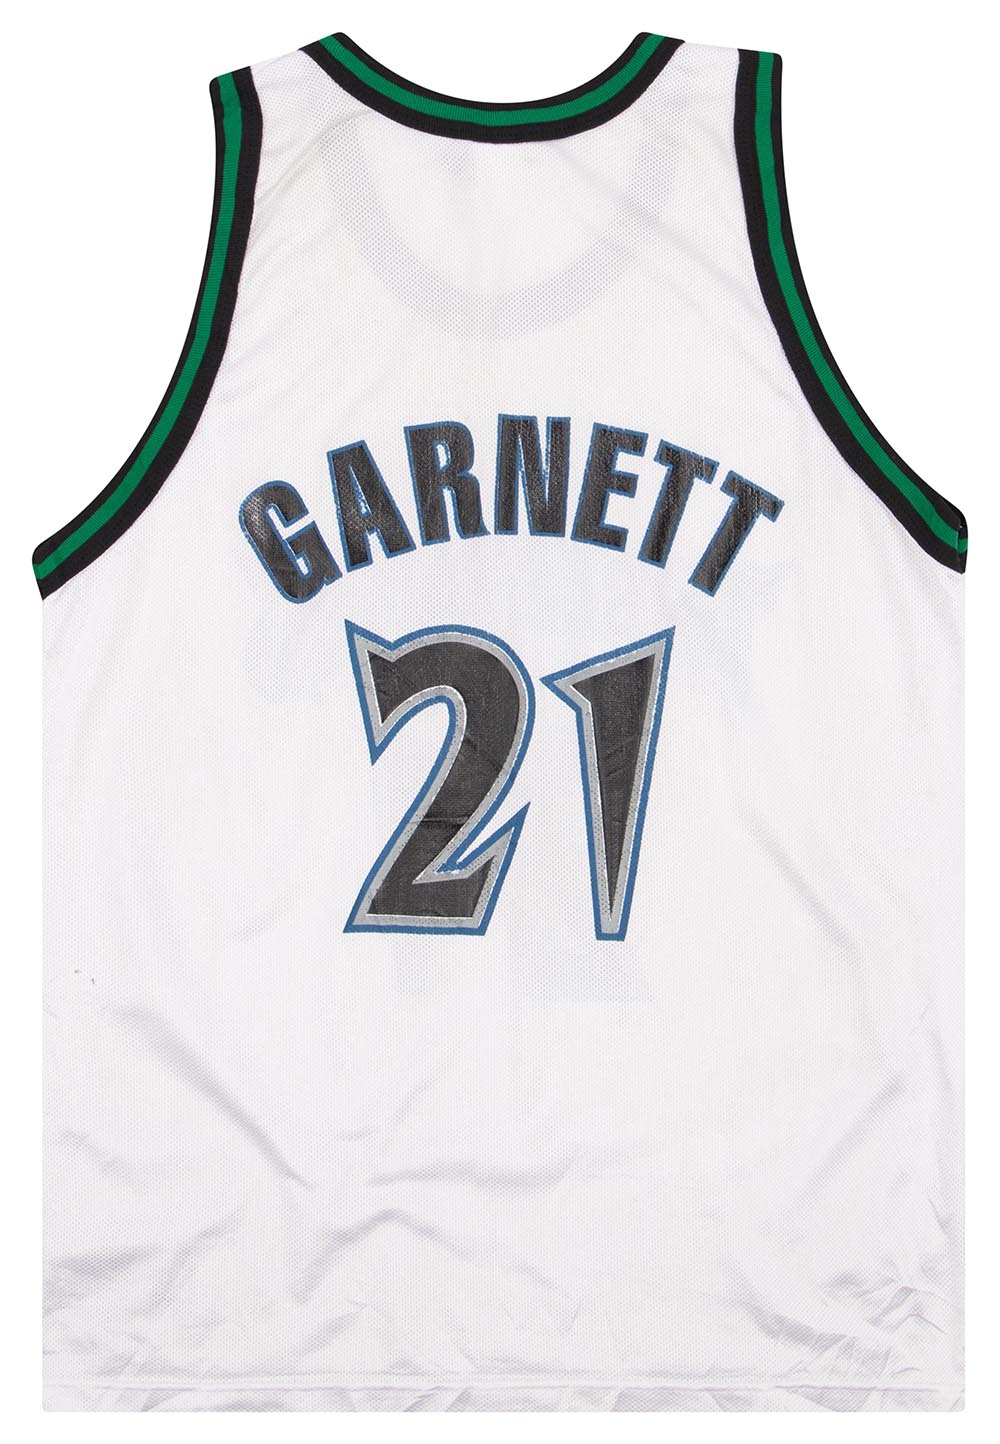 NBA All Star Game Kevin Garnett Timberwolves jersey – Santiagosports